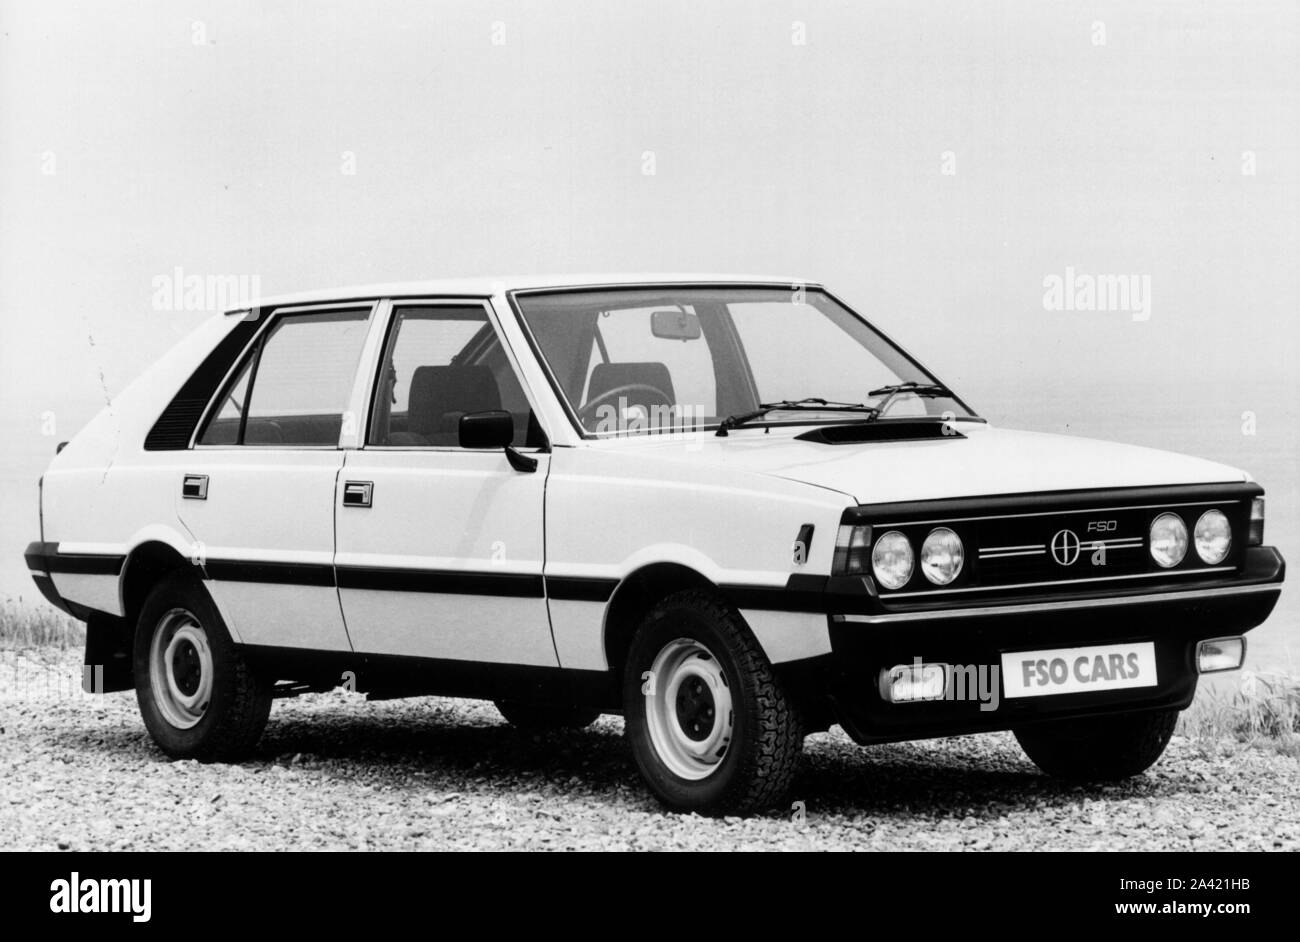 1983 FSO Polonez. Stockfoto